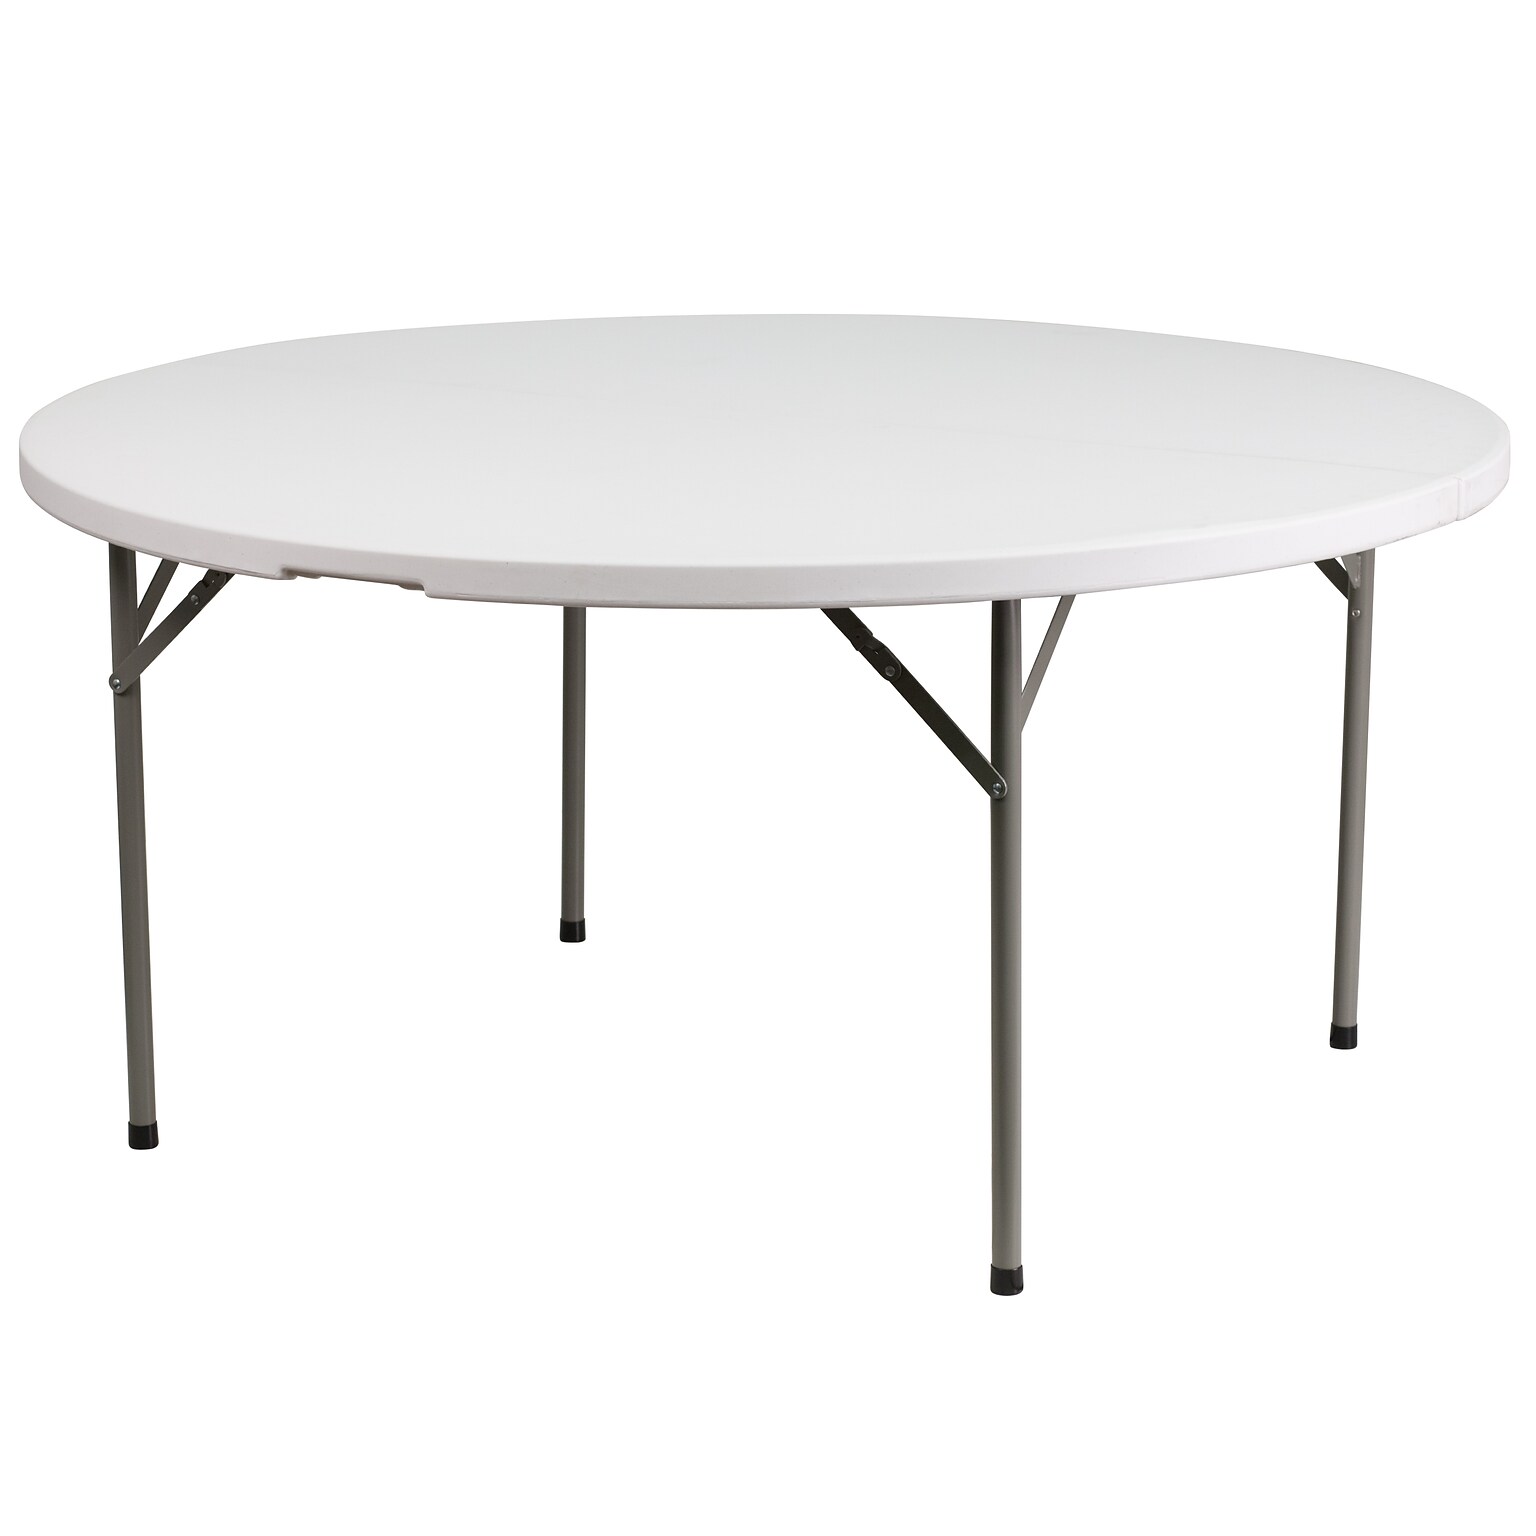 Flash Furniture Elon Folding Table, 60.75 x 60.75, Granite White (DADYCZ1GW)